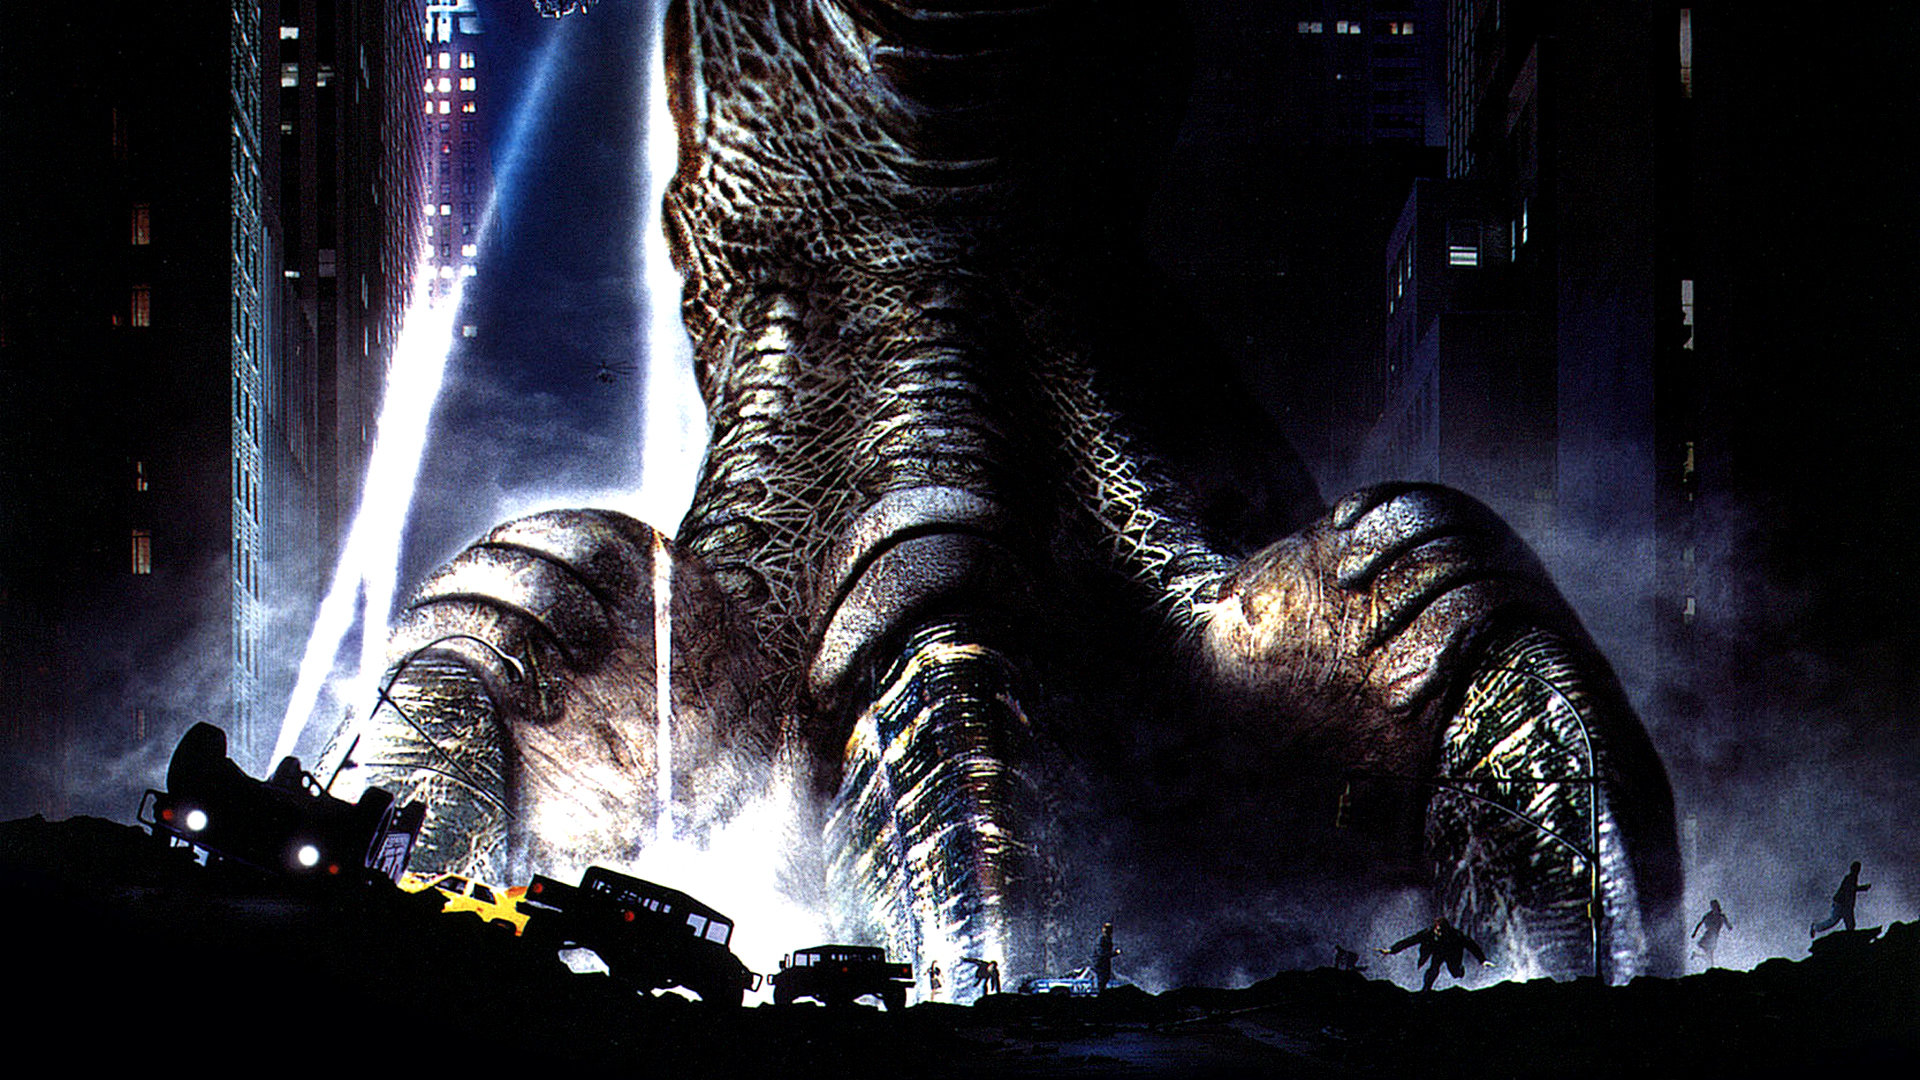 New 'Godzilla' Film Planned For 20121920 x 1080